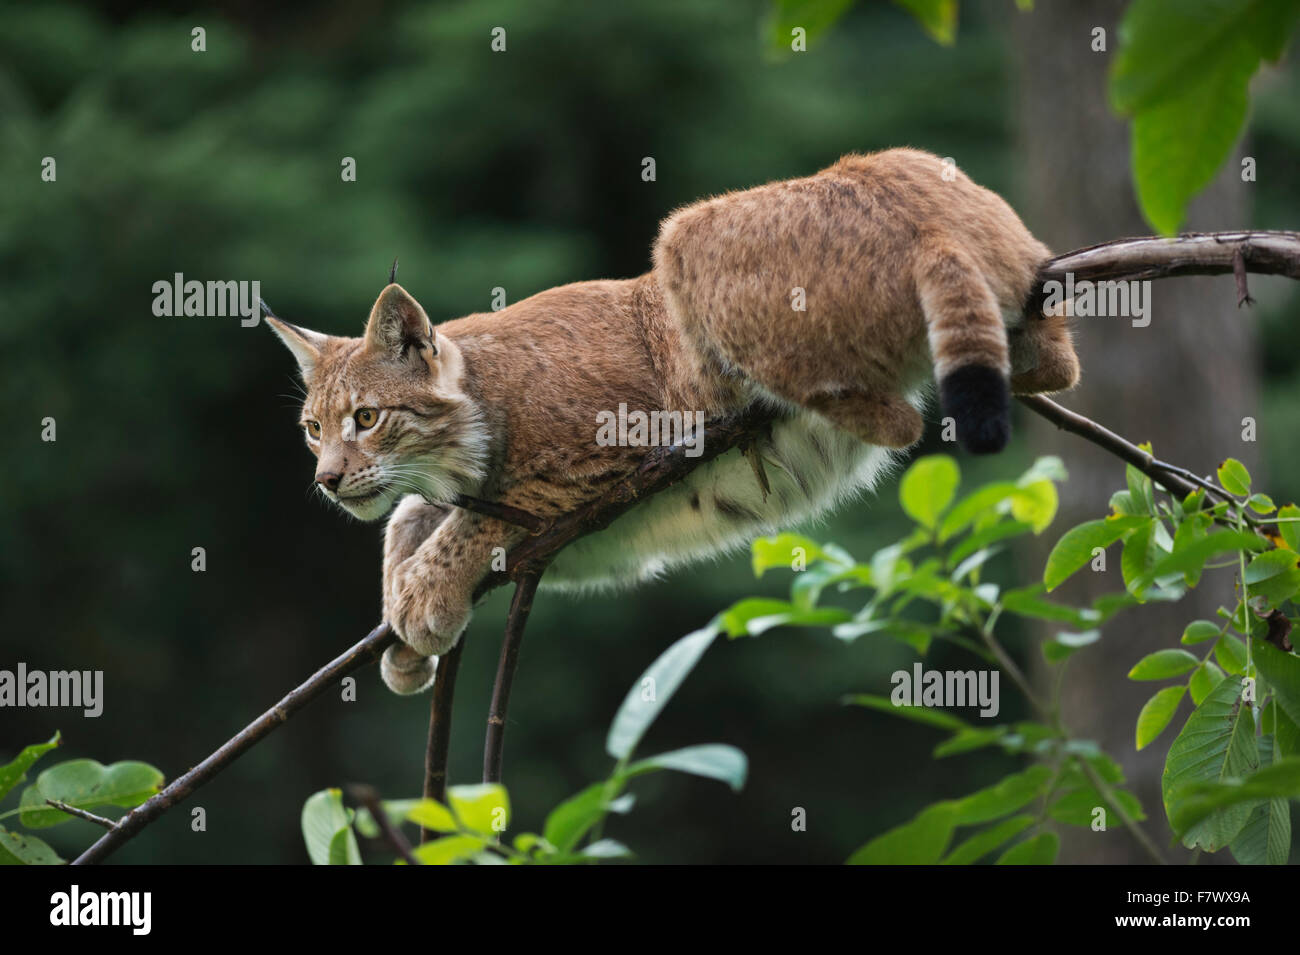 Adulto lince euroasiatica / Eurasischer Luchs ( Lynx lynx ) poggia su un grazioso ramo sottile, guarda avviso. Foto Stock